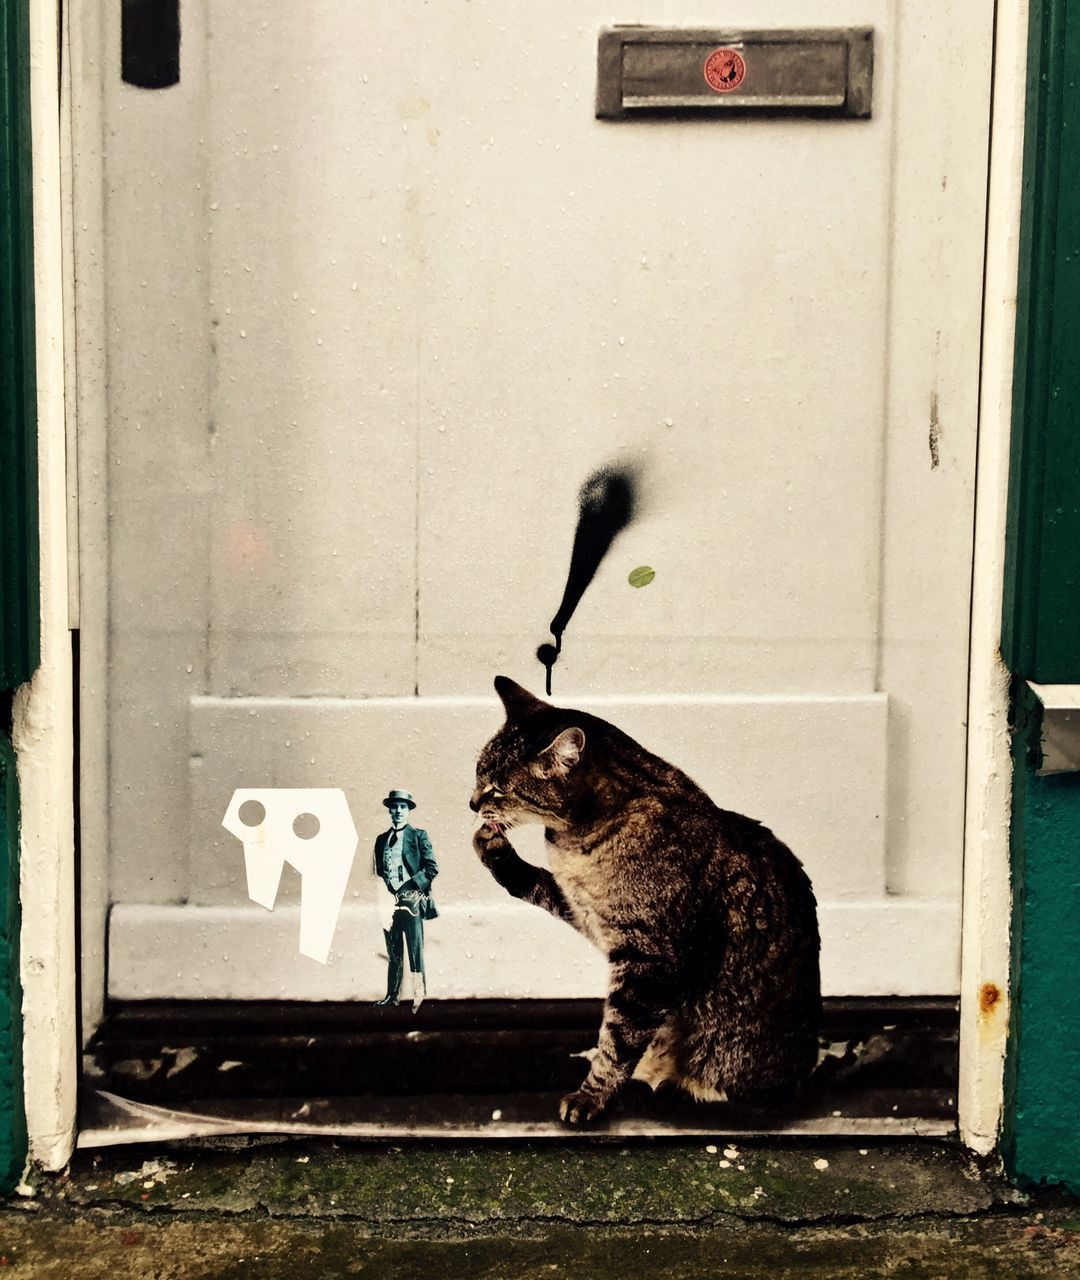 CAT SITTING ON WINDOW SILL